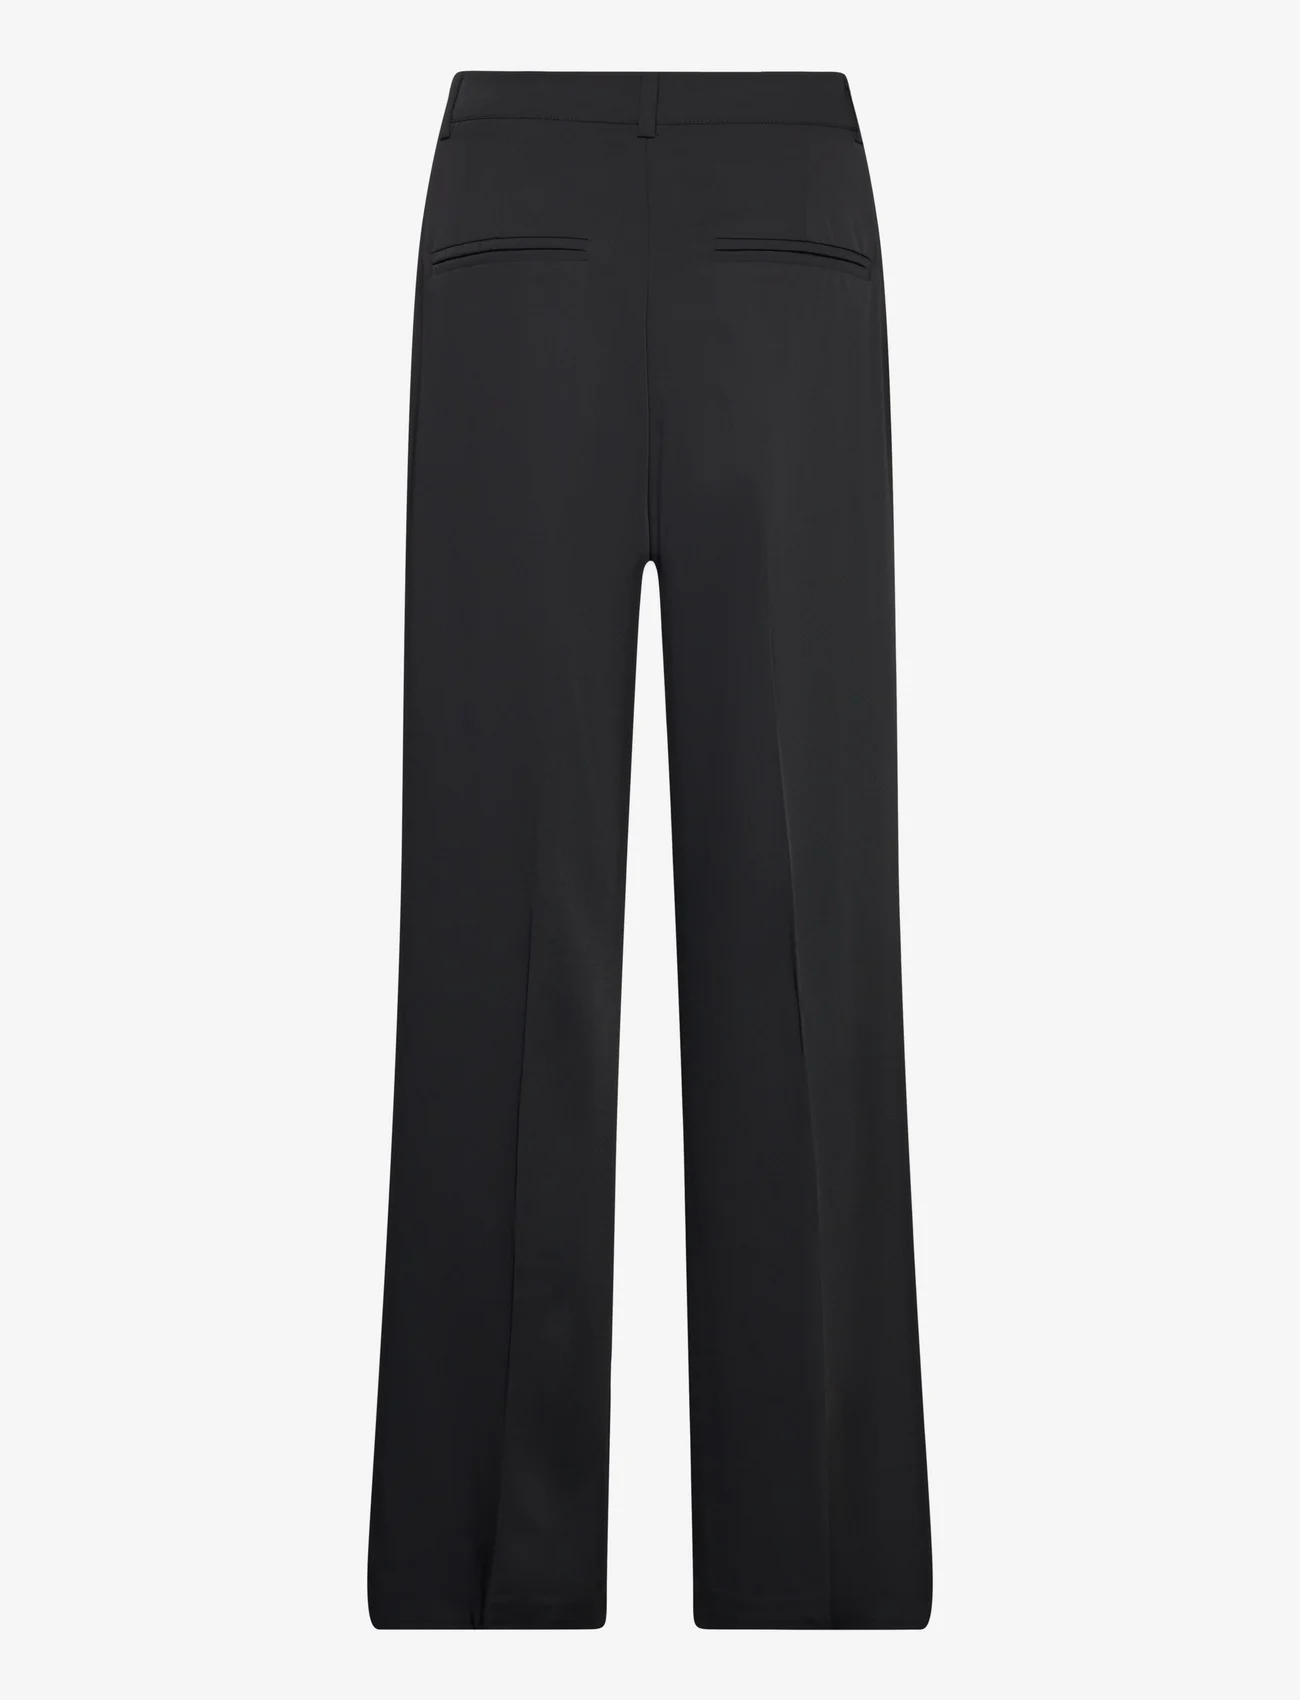 Cras - Nancycras Pants - tailored trousers - black - 1